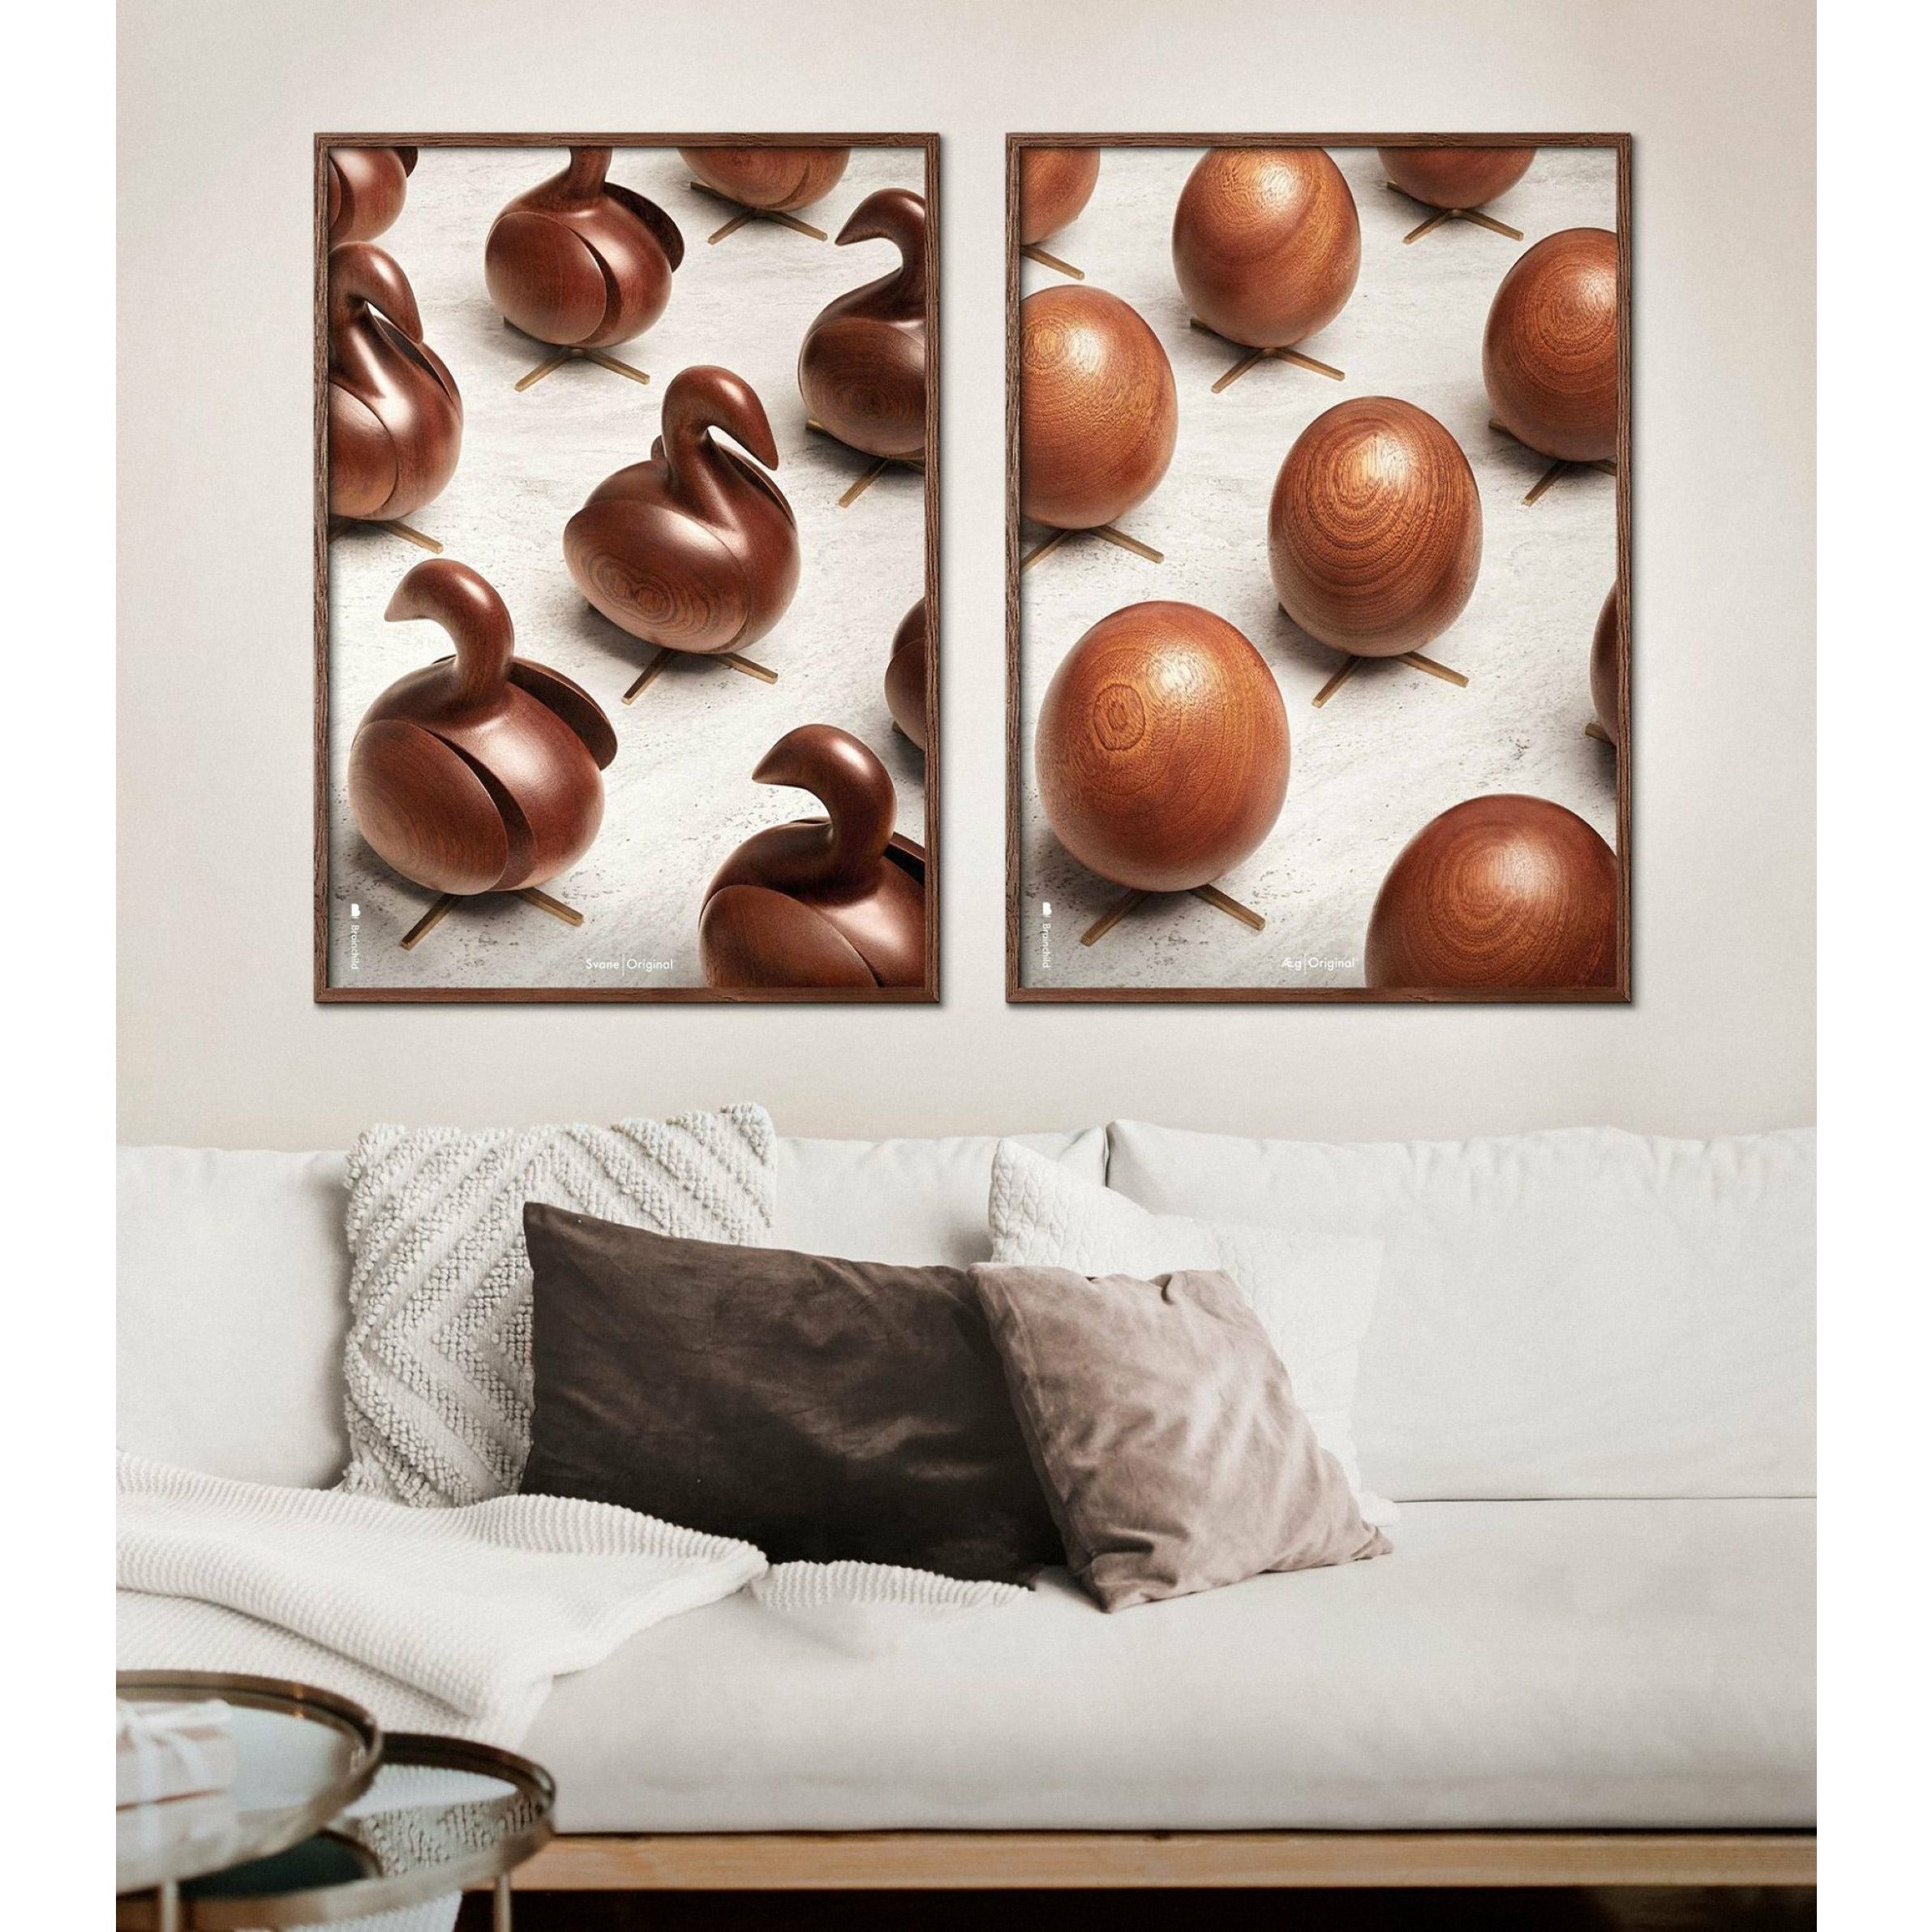 Brainchild Egg Parade Poster, Frame Made Of Light Wood, 70x100 Cm